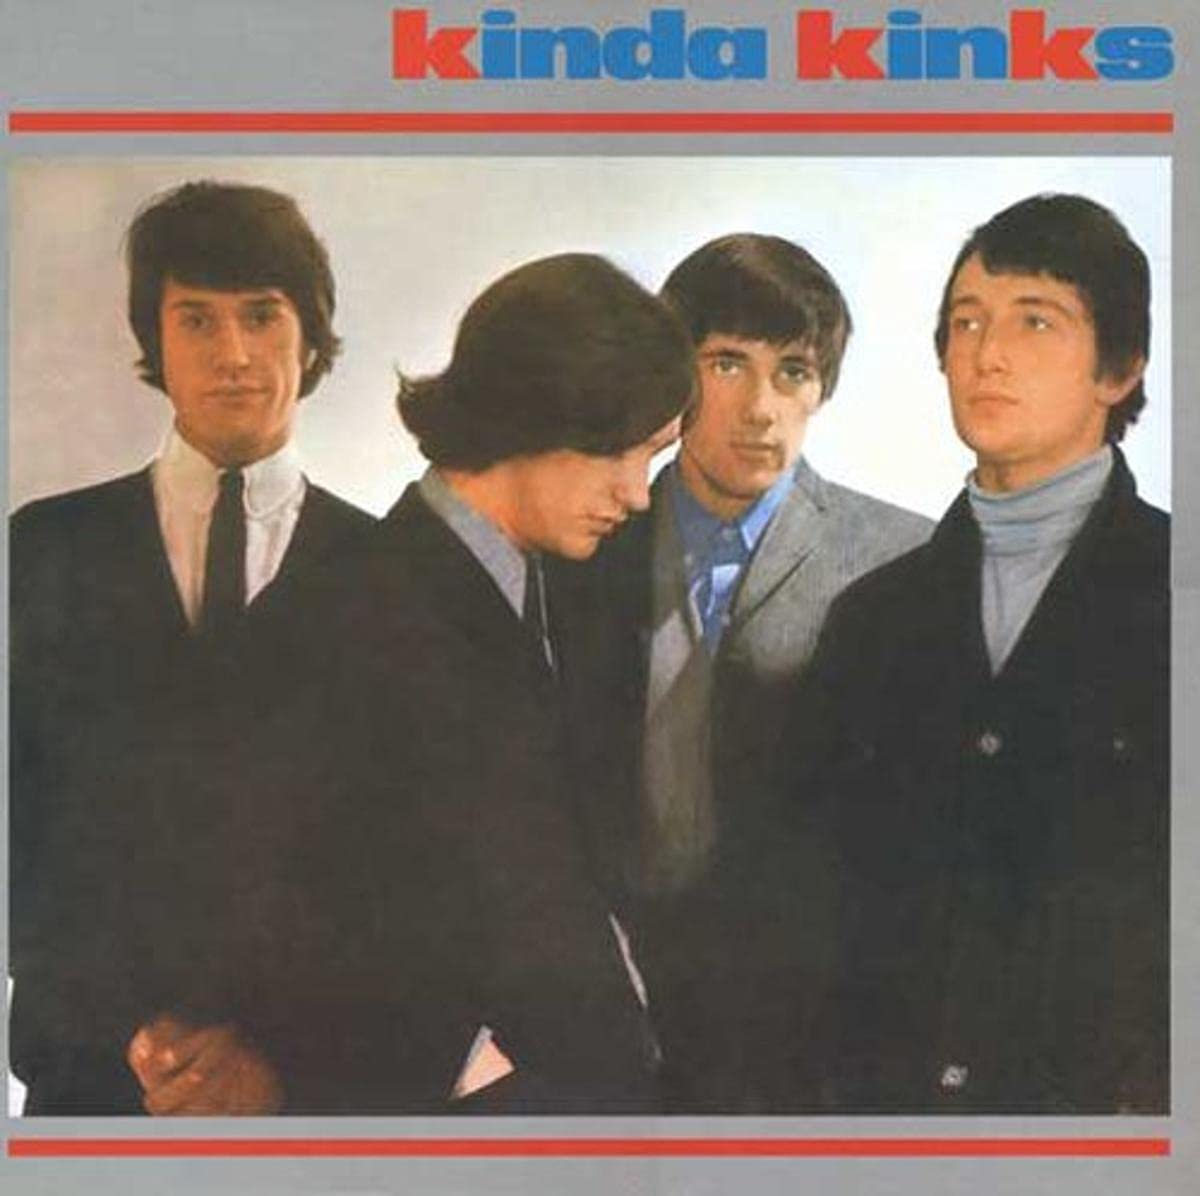 THE KINKS 'KINDA KINKS' LP